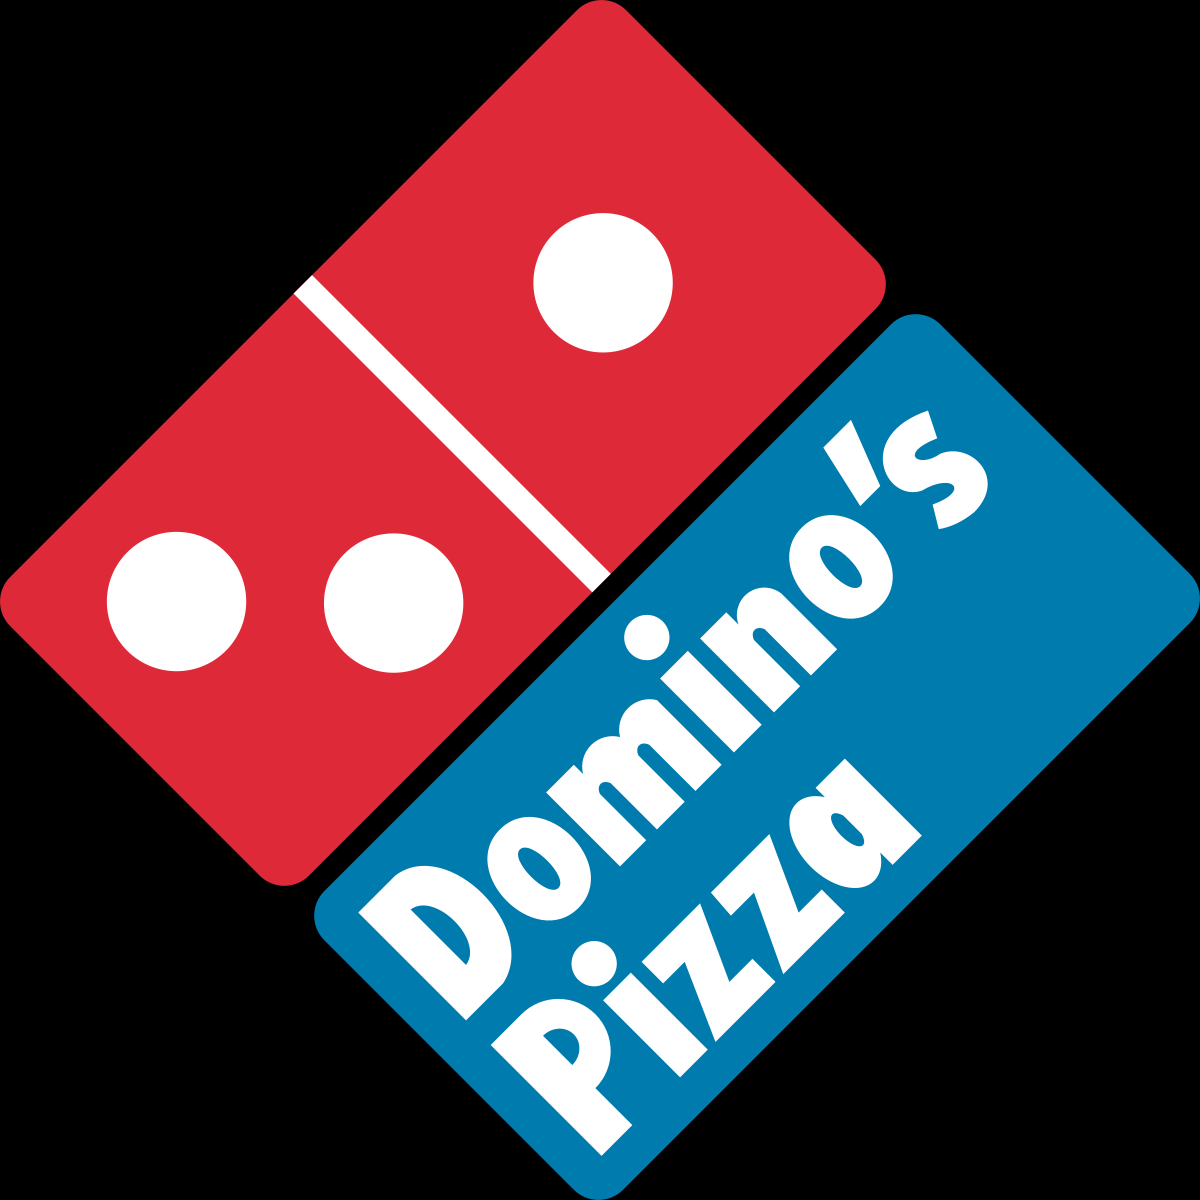 Domino's coupons & discounts